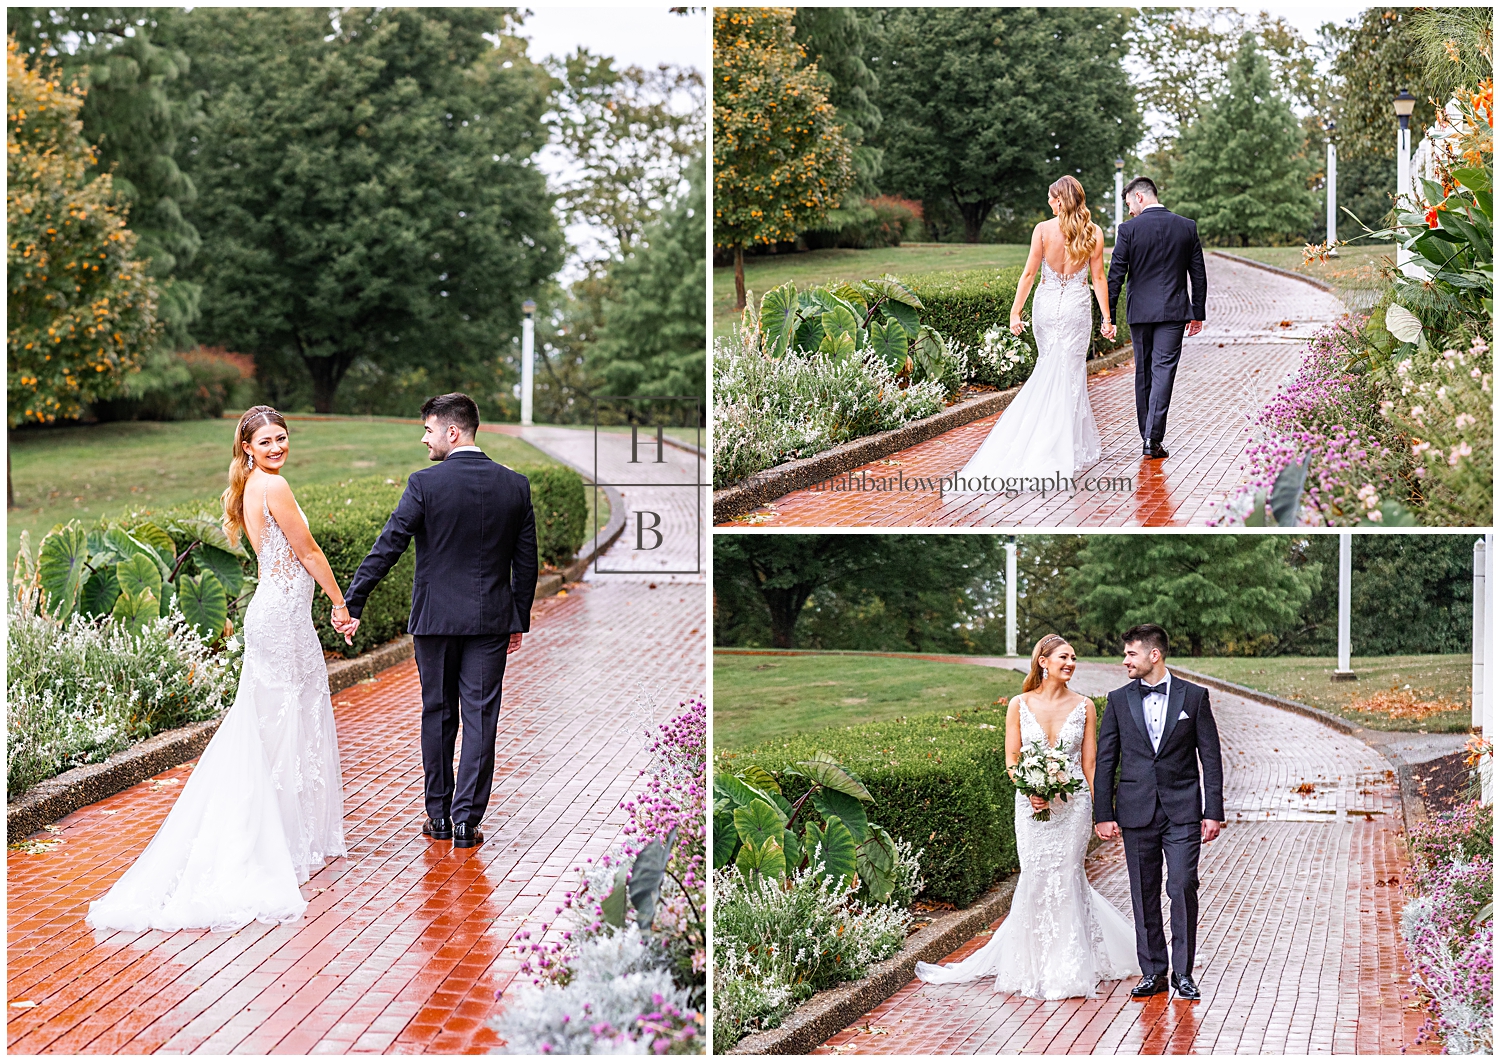 Bride and groom walk on rainy wedding day on wet, red brick path.